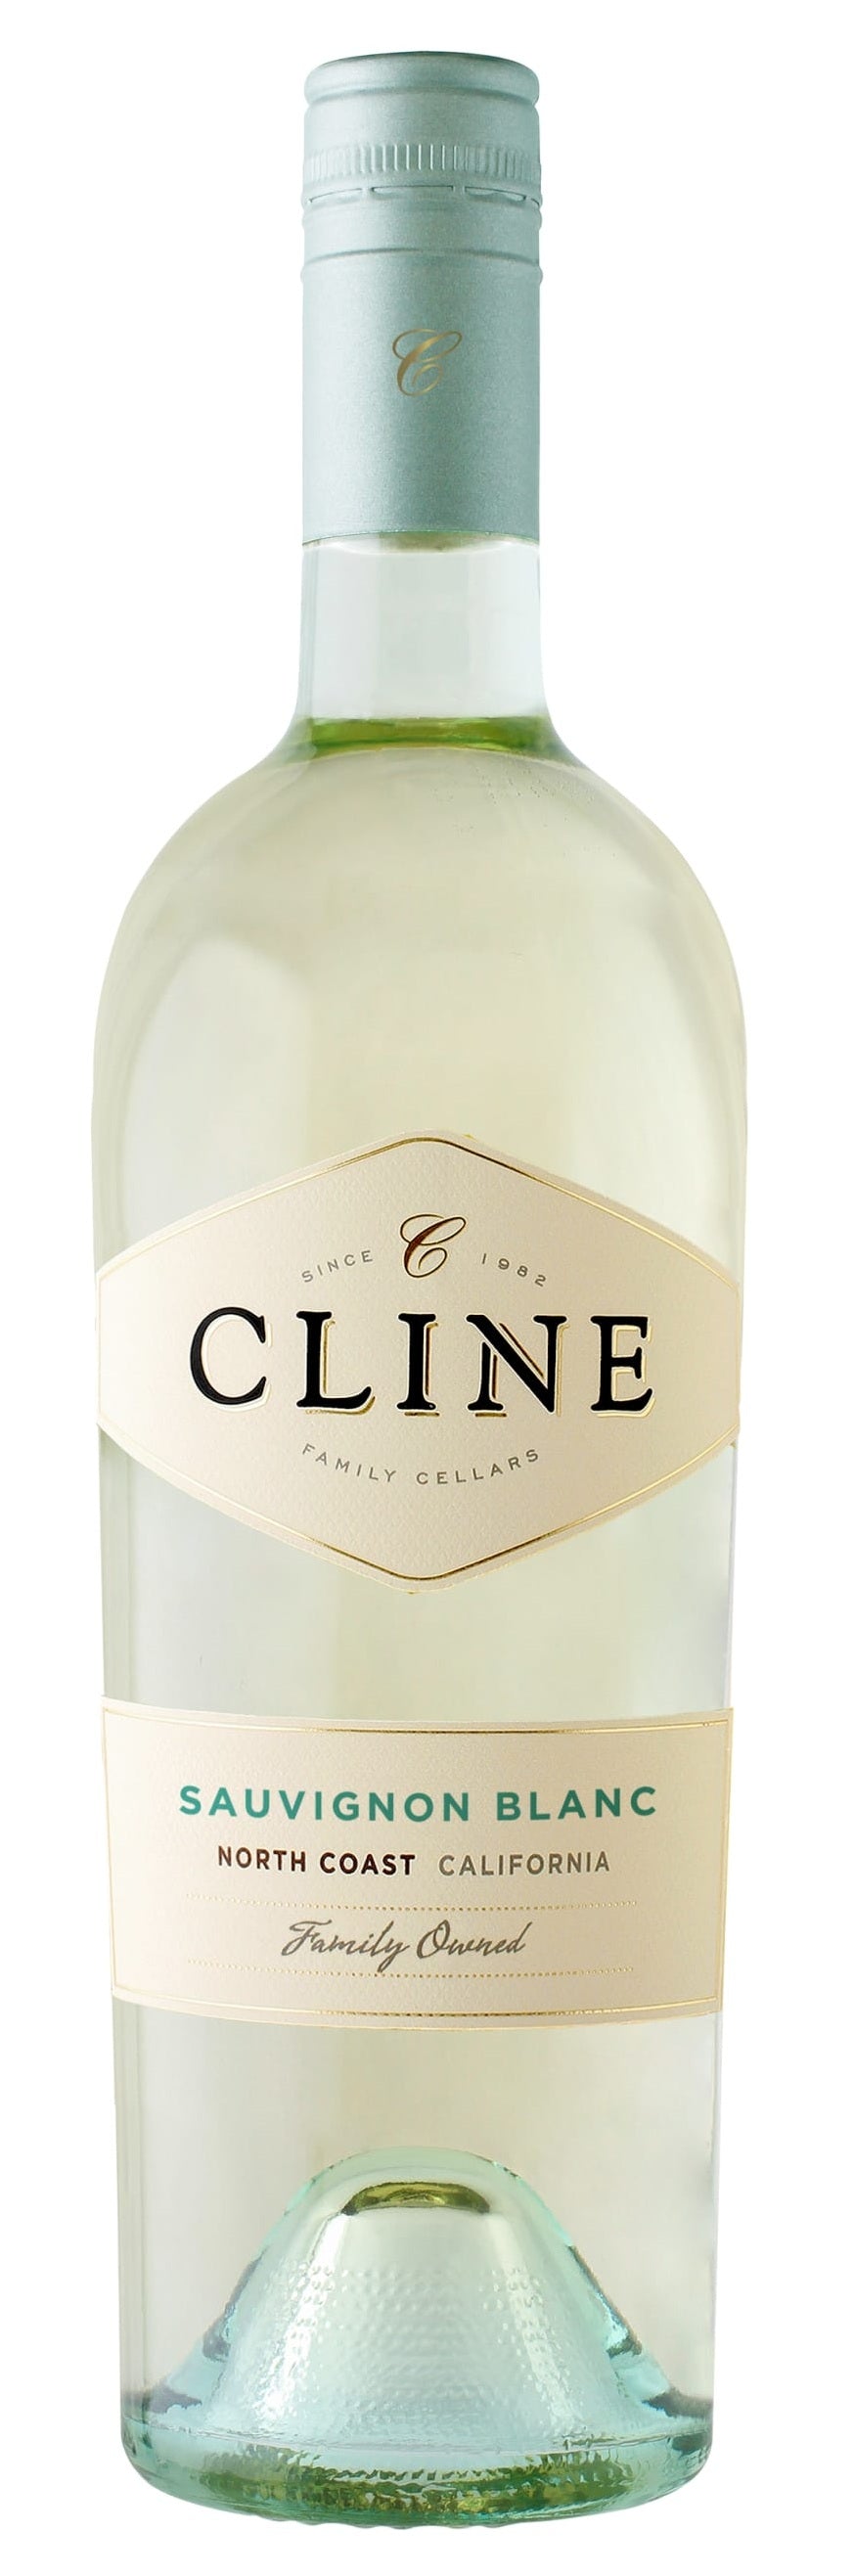 Cline Cellars Sauvignon Blanc 2019